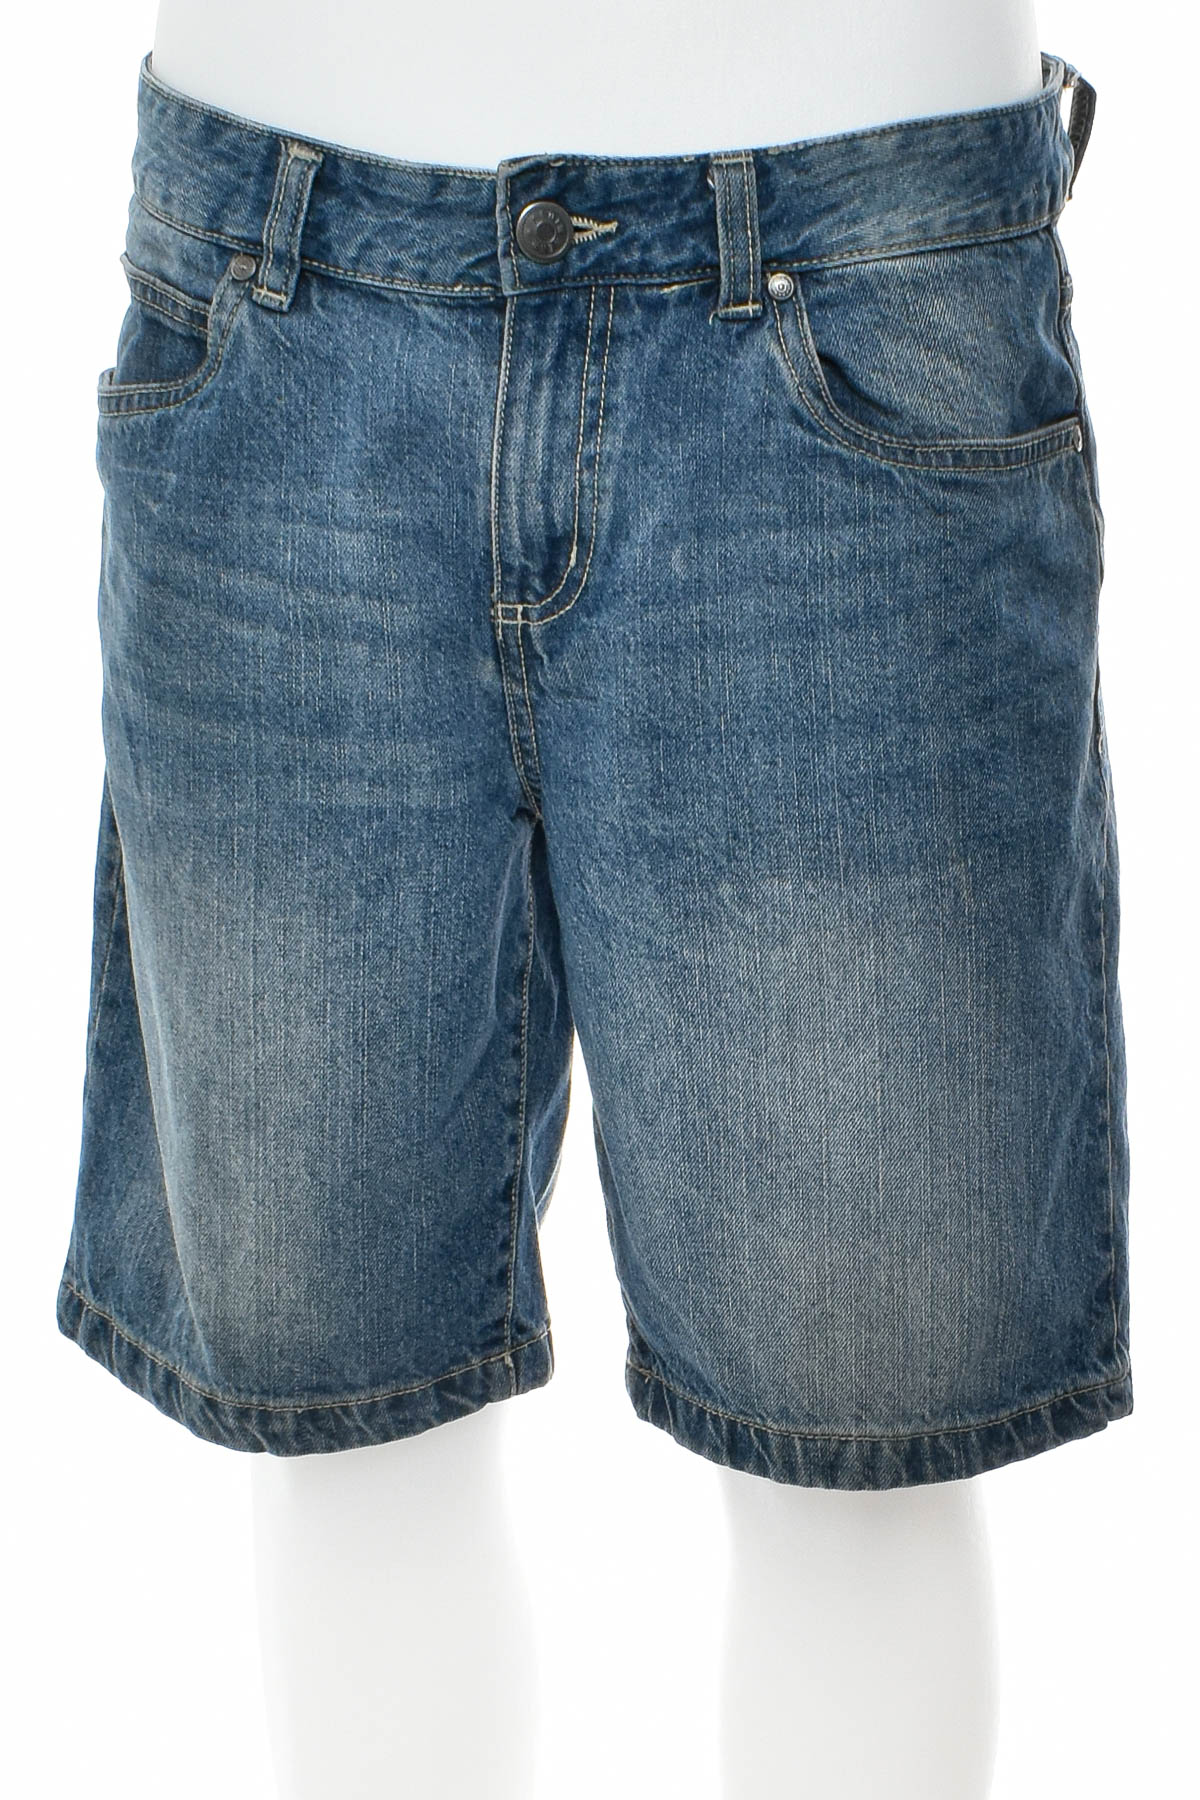 Men's shorts - LIVERGY - 0